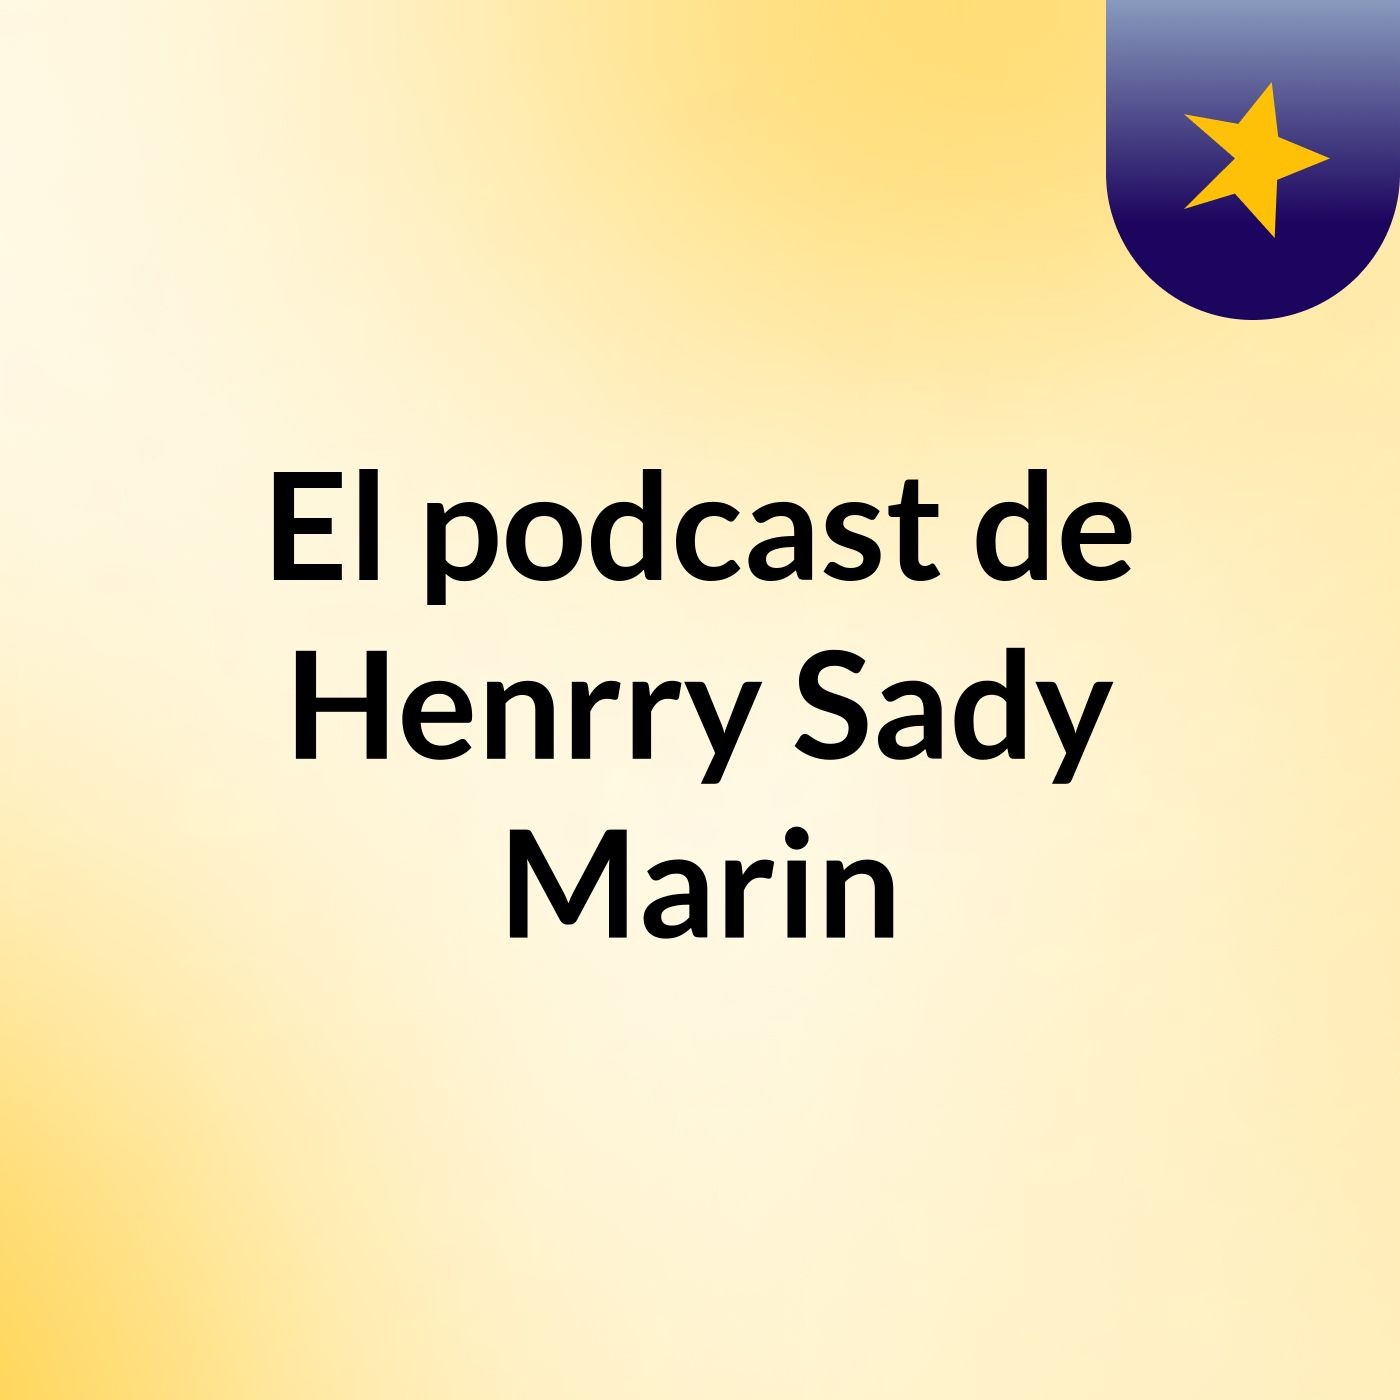 El podcast de Henrry Sady Marin